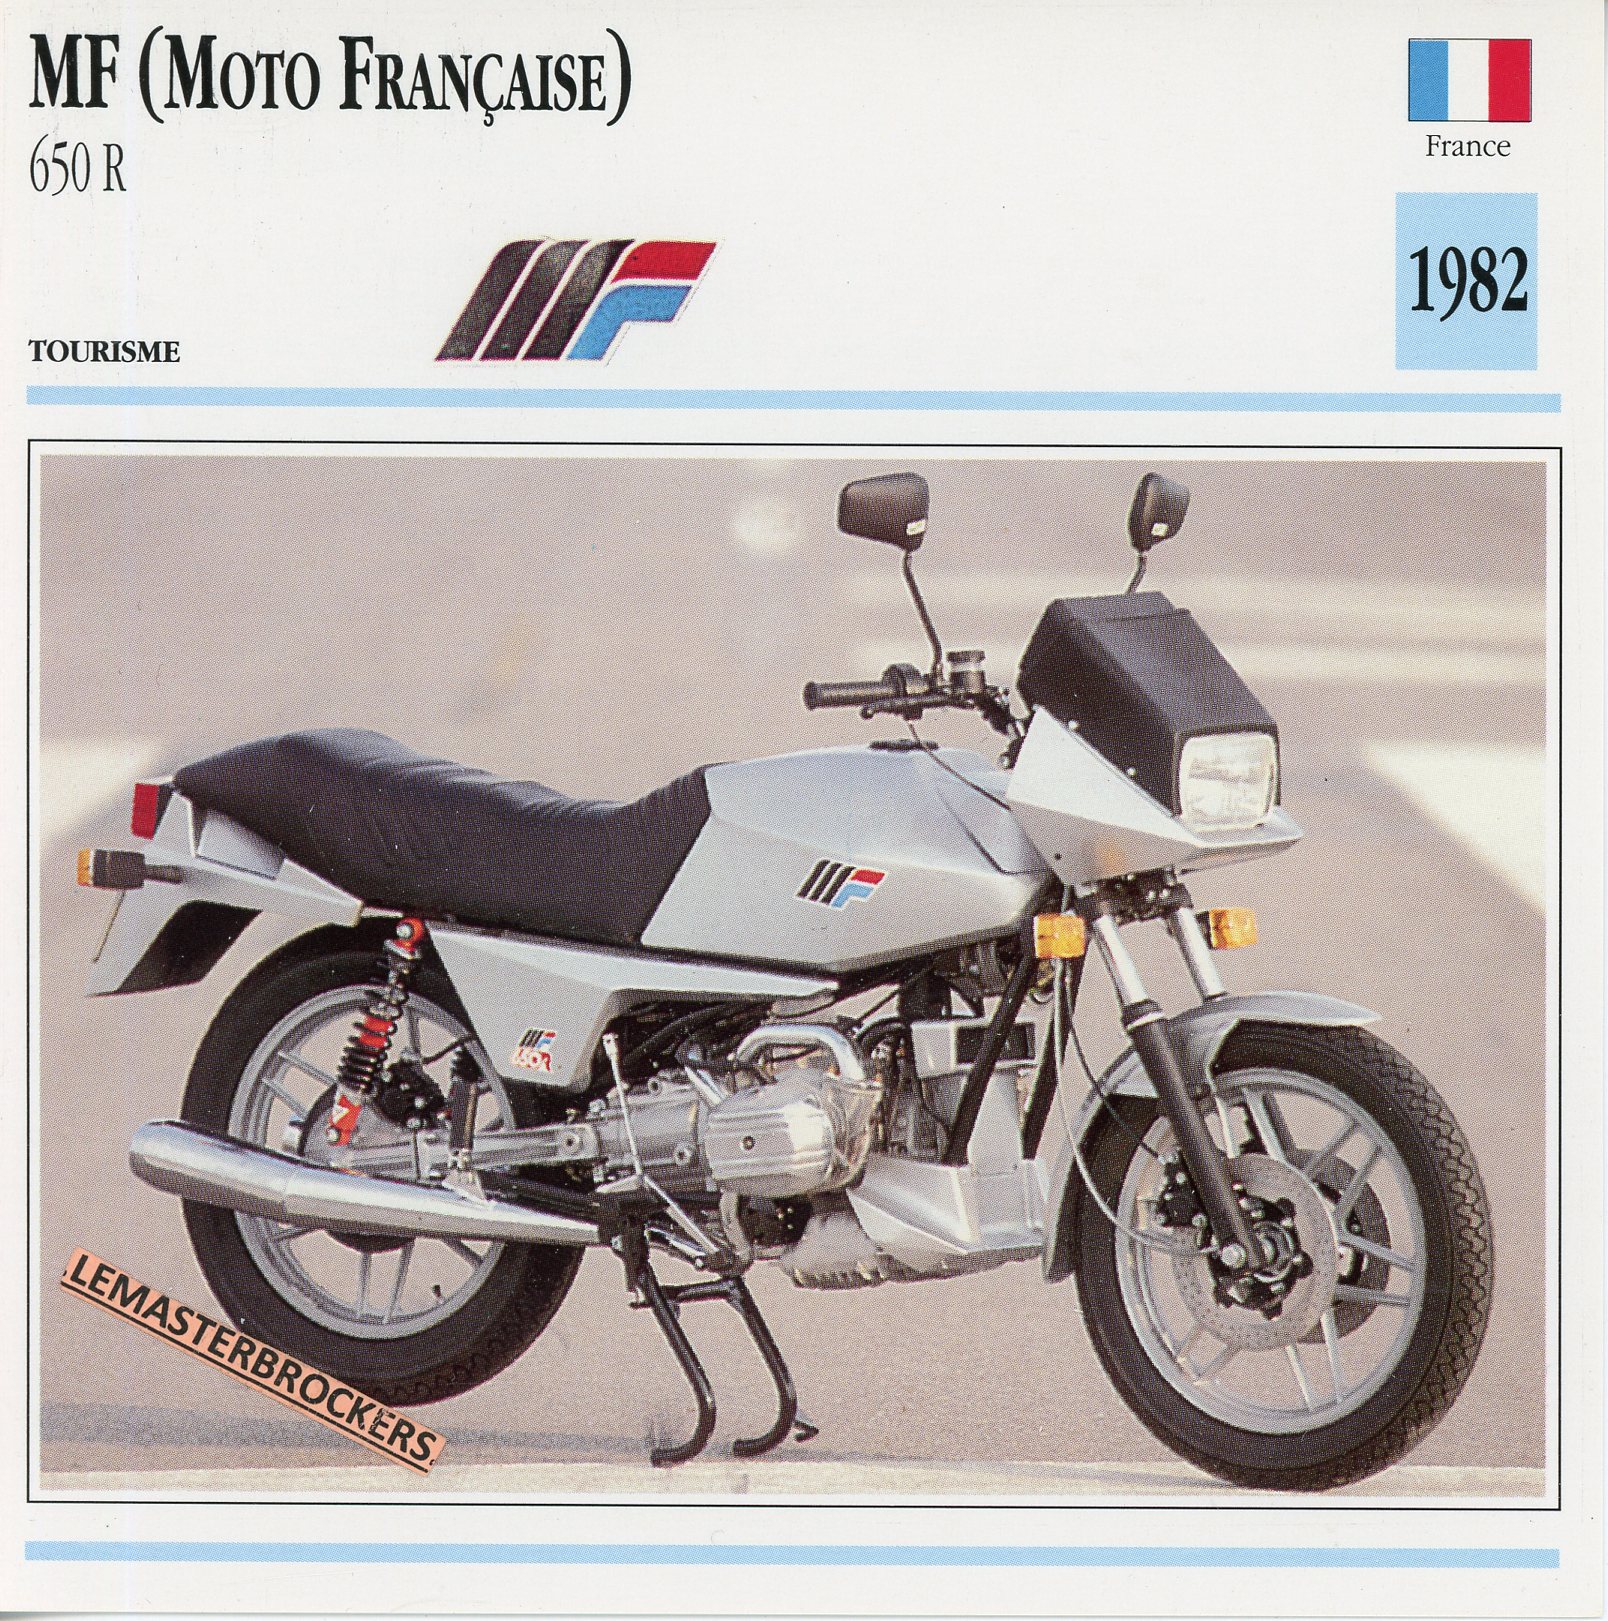 MF-MOTO-FRANÇAISE-650-650R-1982-LEMASTERBROCKERS-FICHE-MOTO-ATLAS-CARD